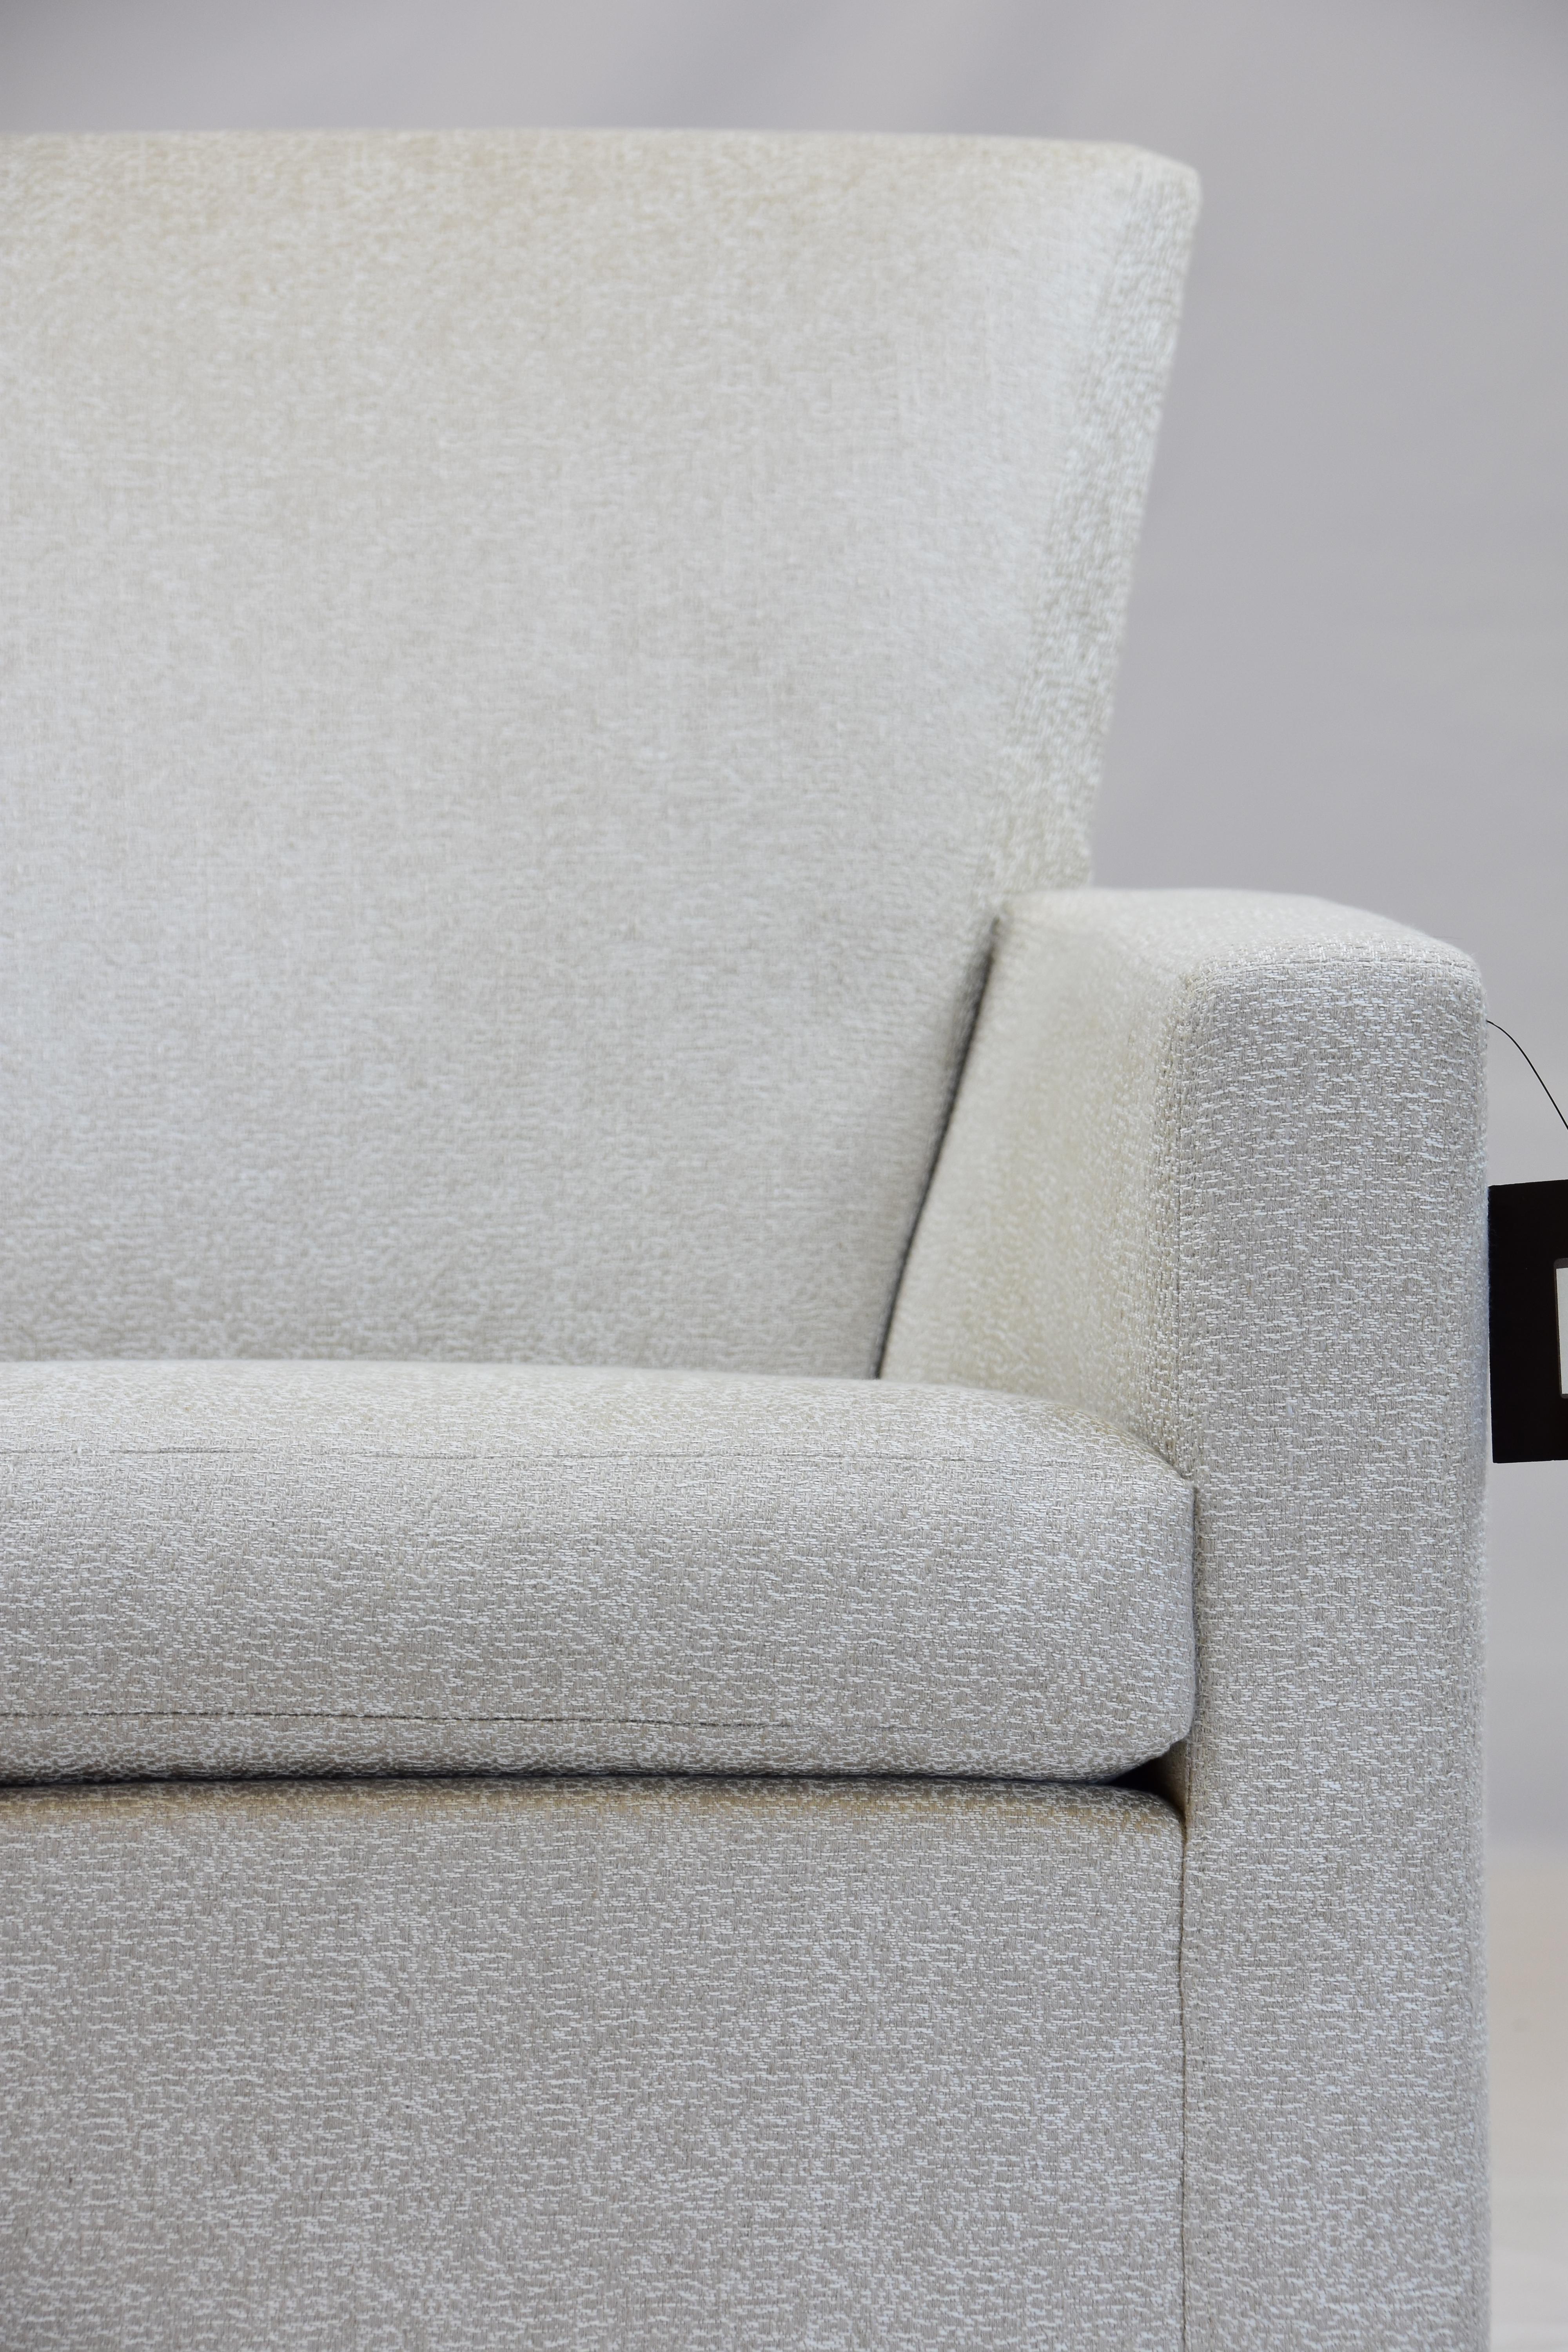 Le Jeune Upholstery Barrel Swivel Kara Chair Showroom Model, 2 Available For Sale 6